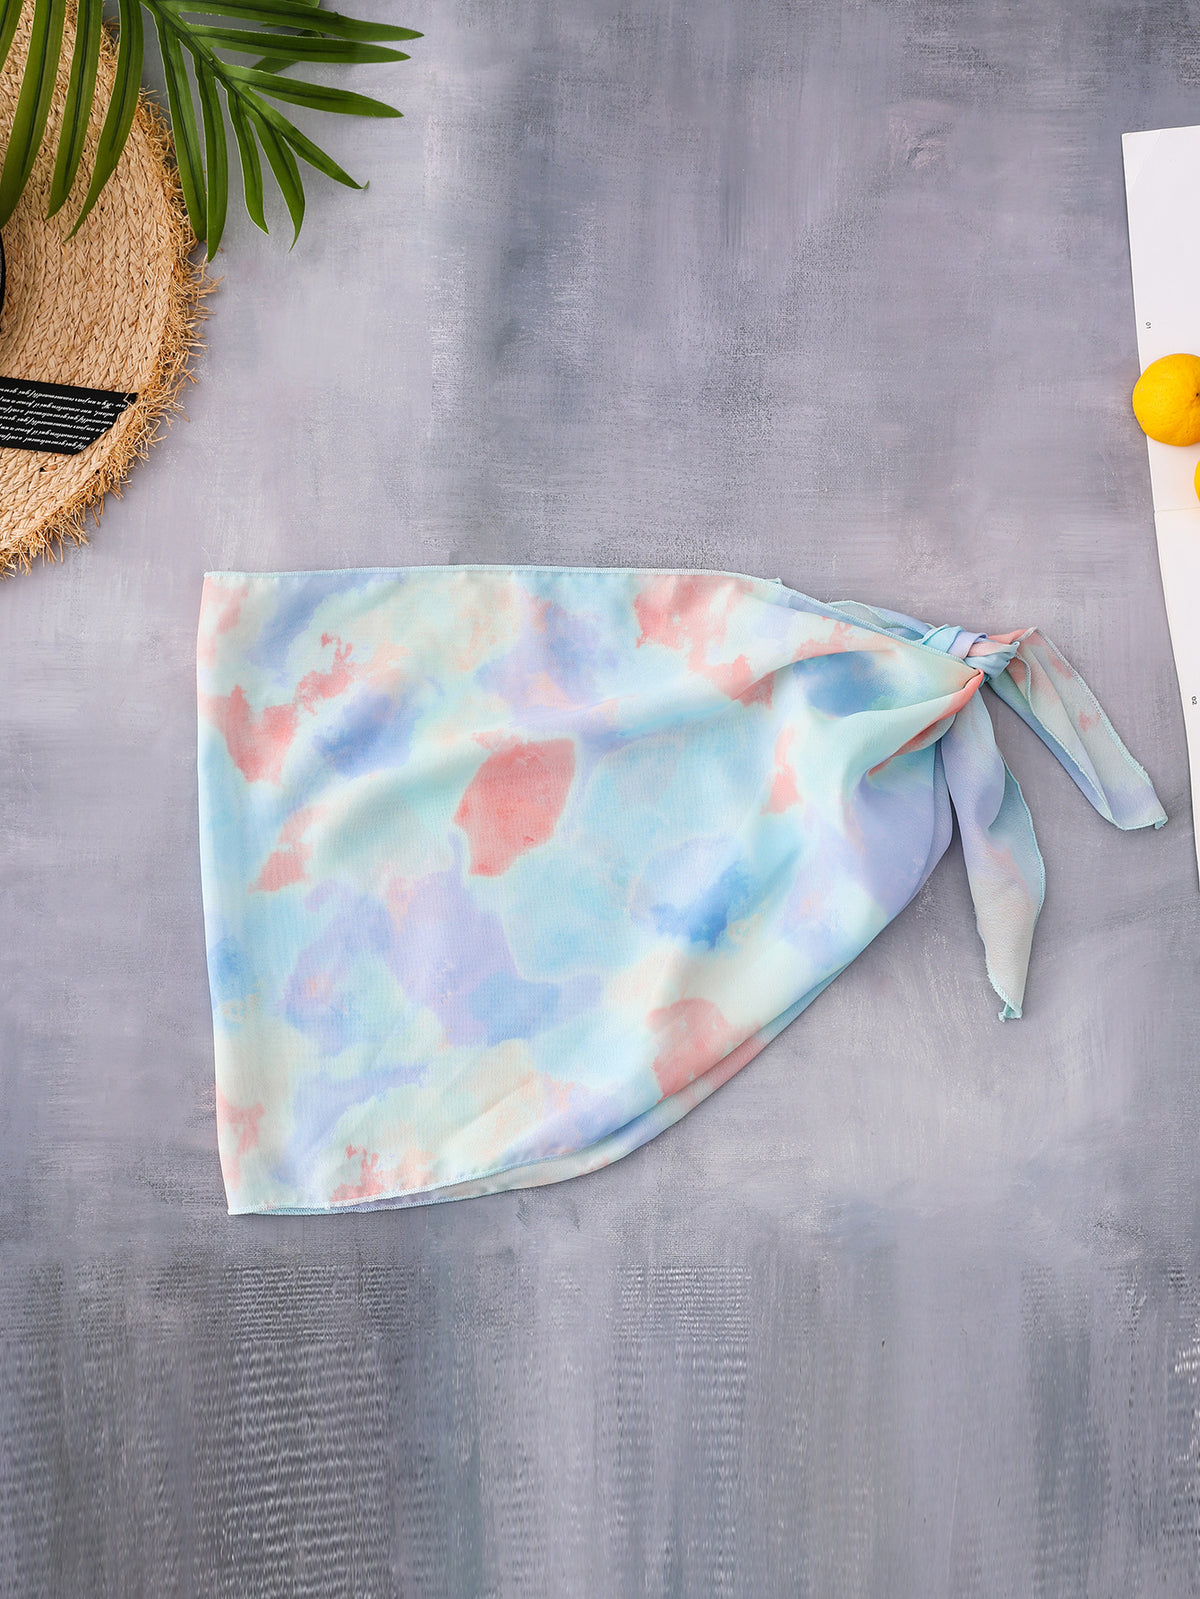 Ladies Mesh Tie-Dyed Irregular Strap Beach Dress 3 Pieces Swimsuit